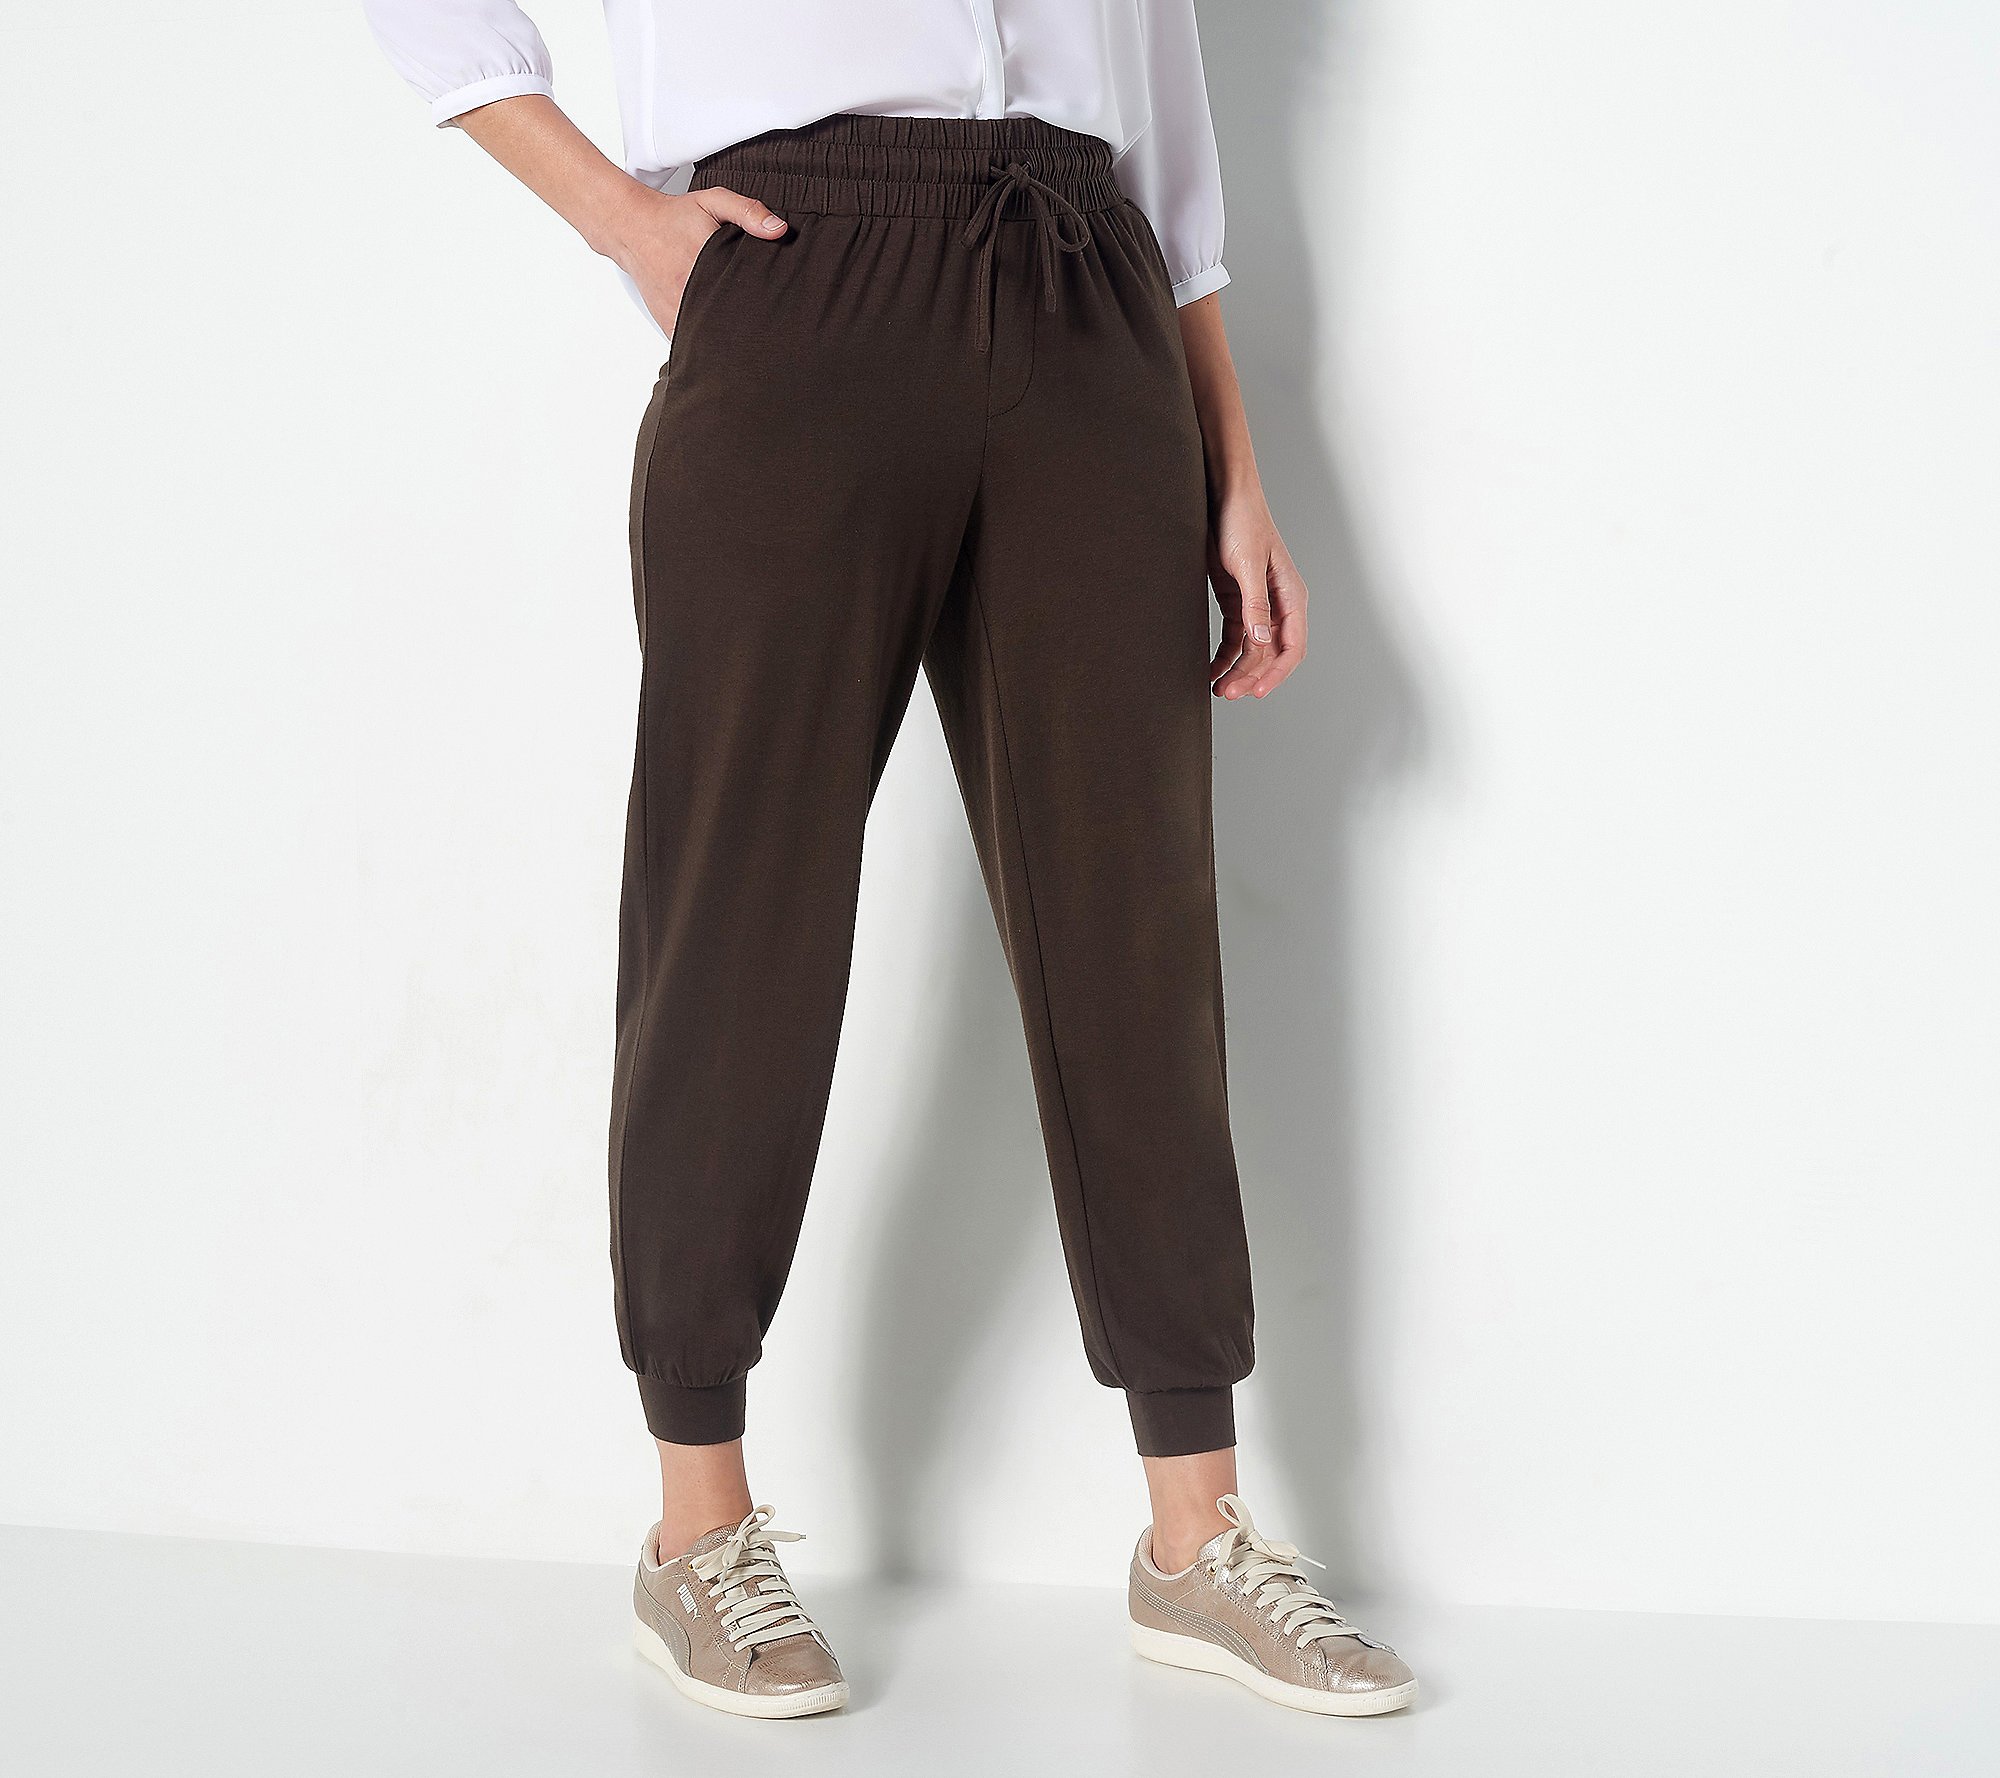 AnyBody Loungewear Women's Petite Cozy Knit Crop Jogger Pants Black PS Size QVC 